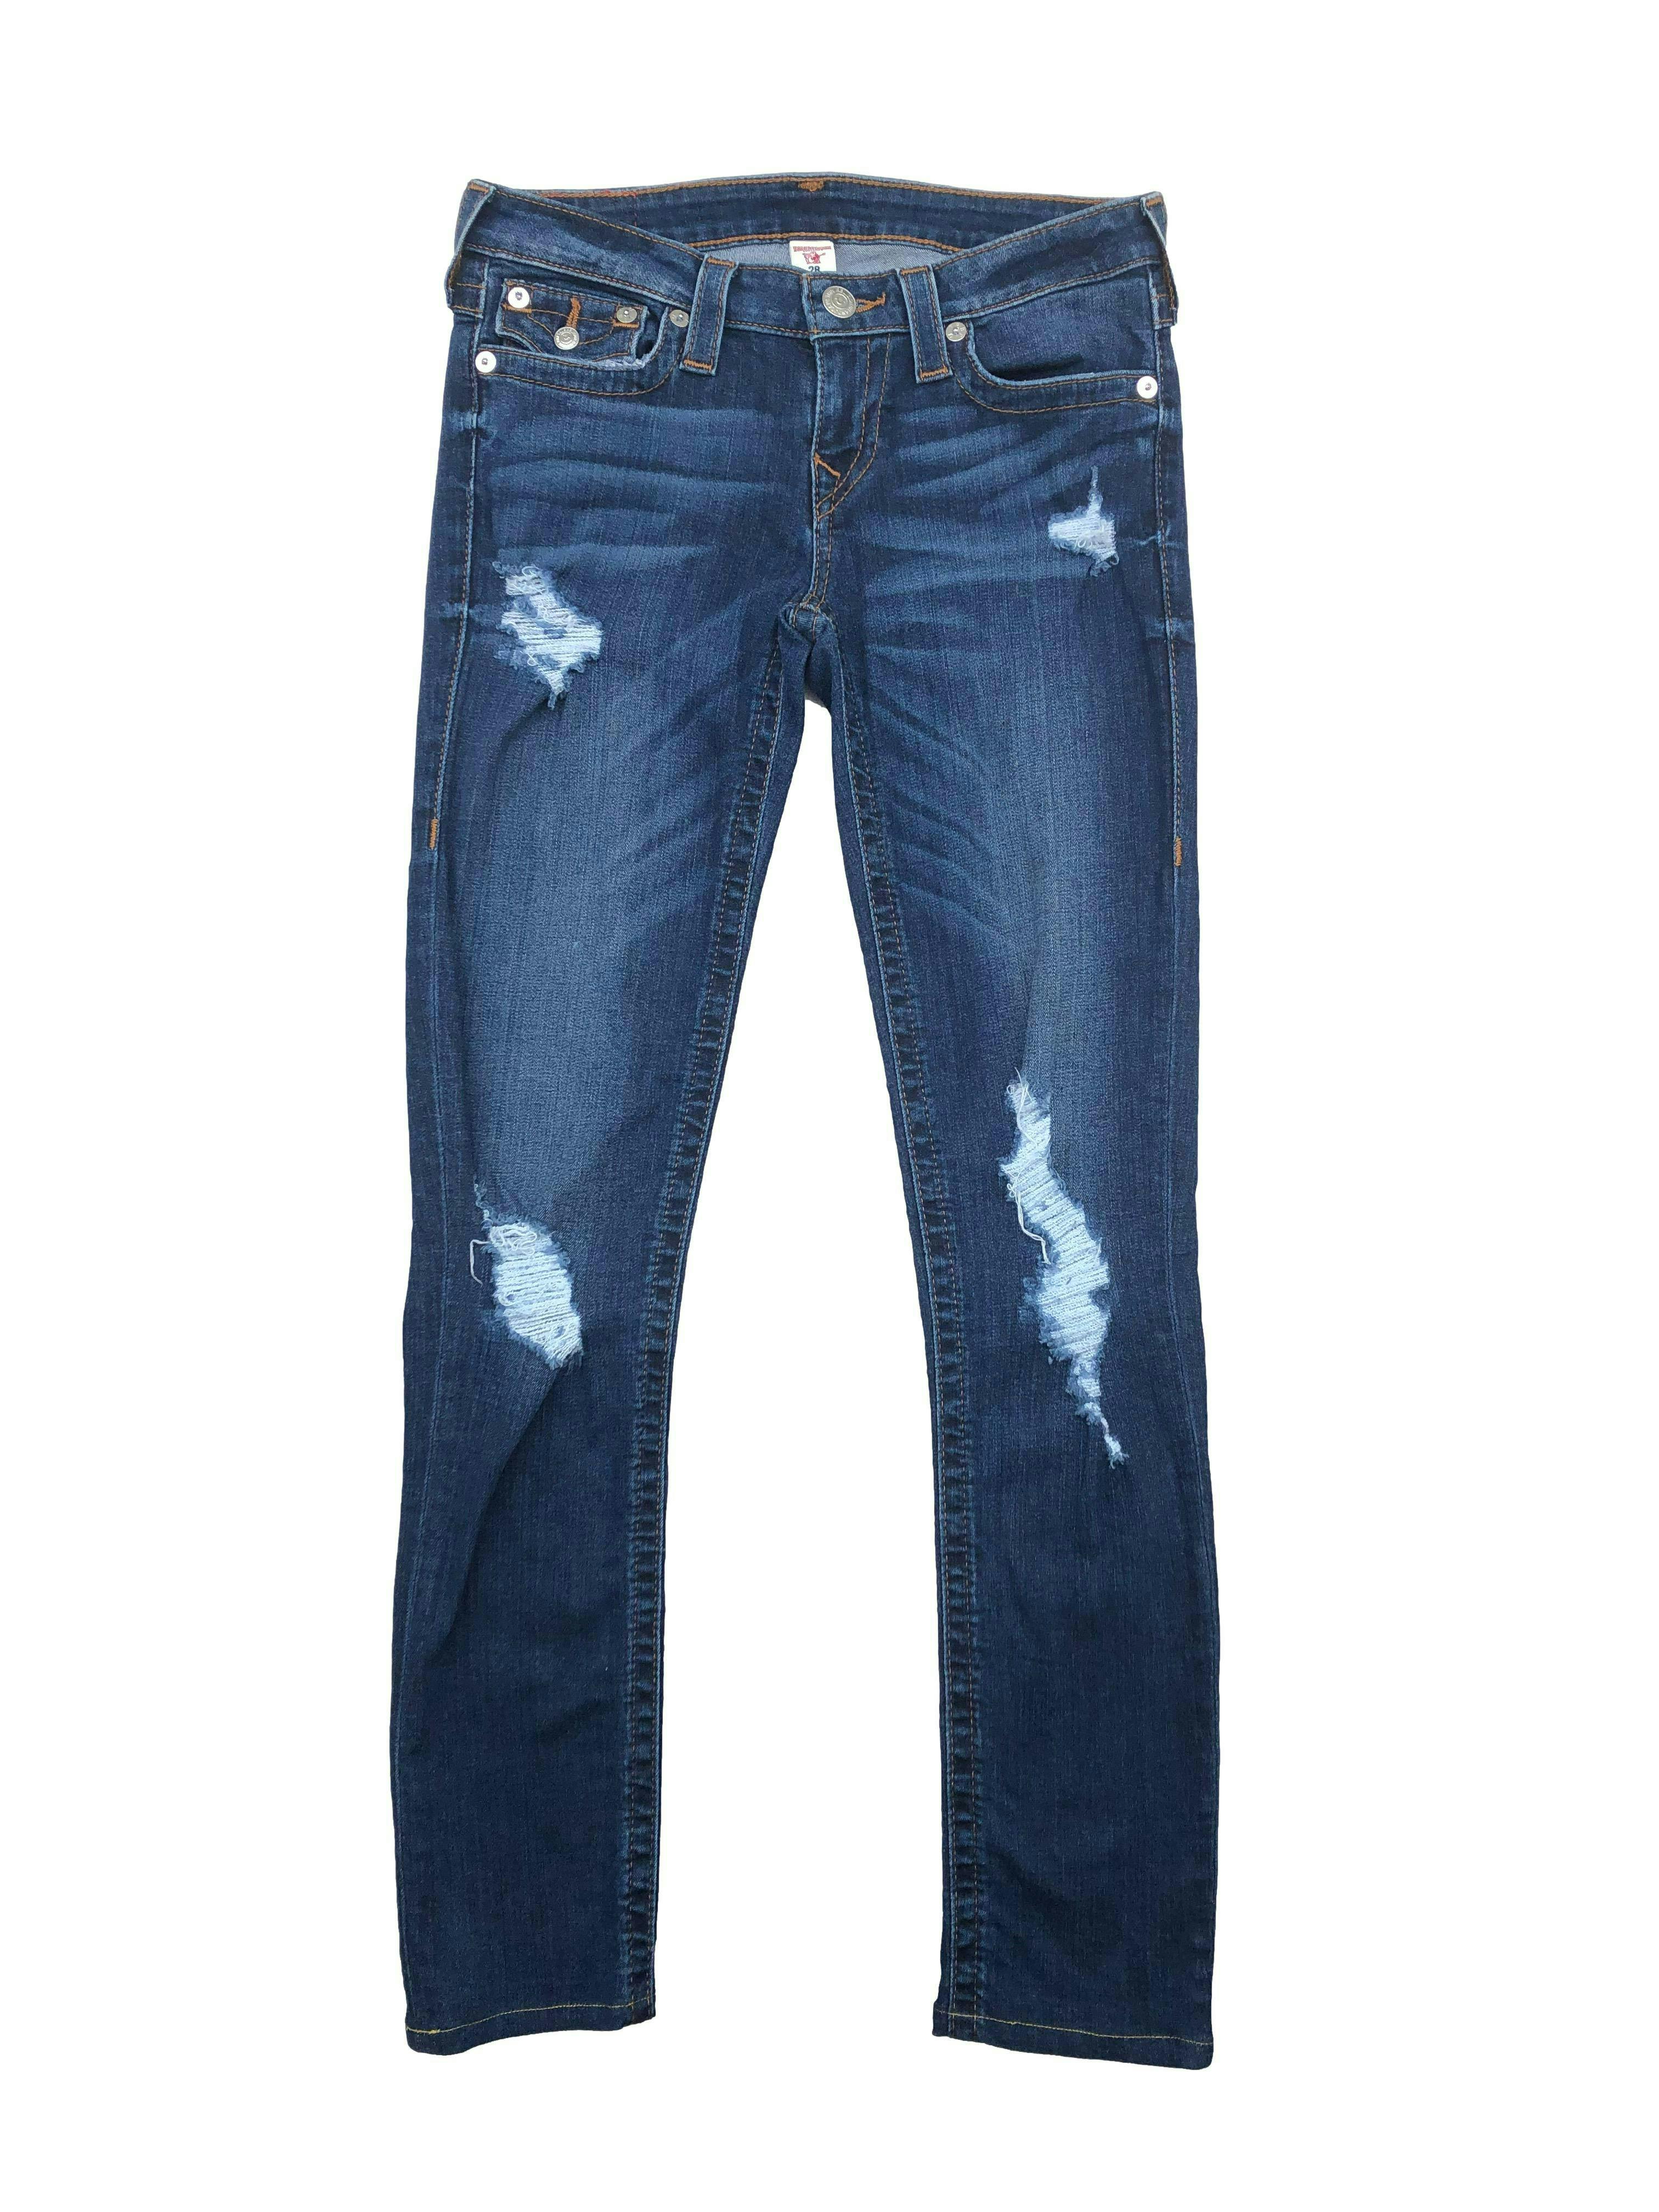 Skinny jean True Religion azul con rasgados y focalizado, Cintura 78cm Tiro 20cm Largo 100cm. Precio original S/ 600